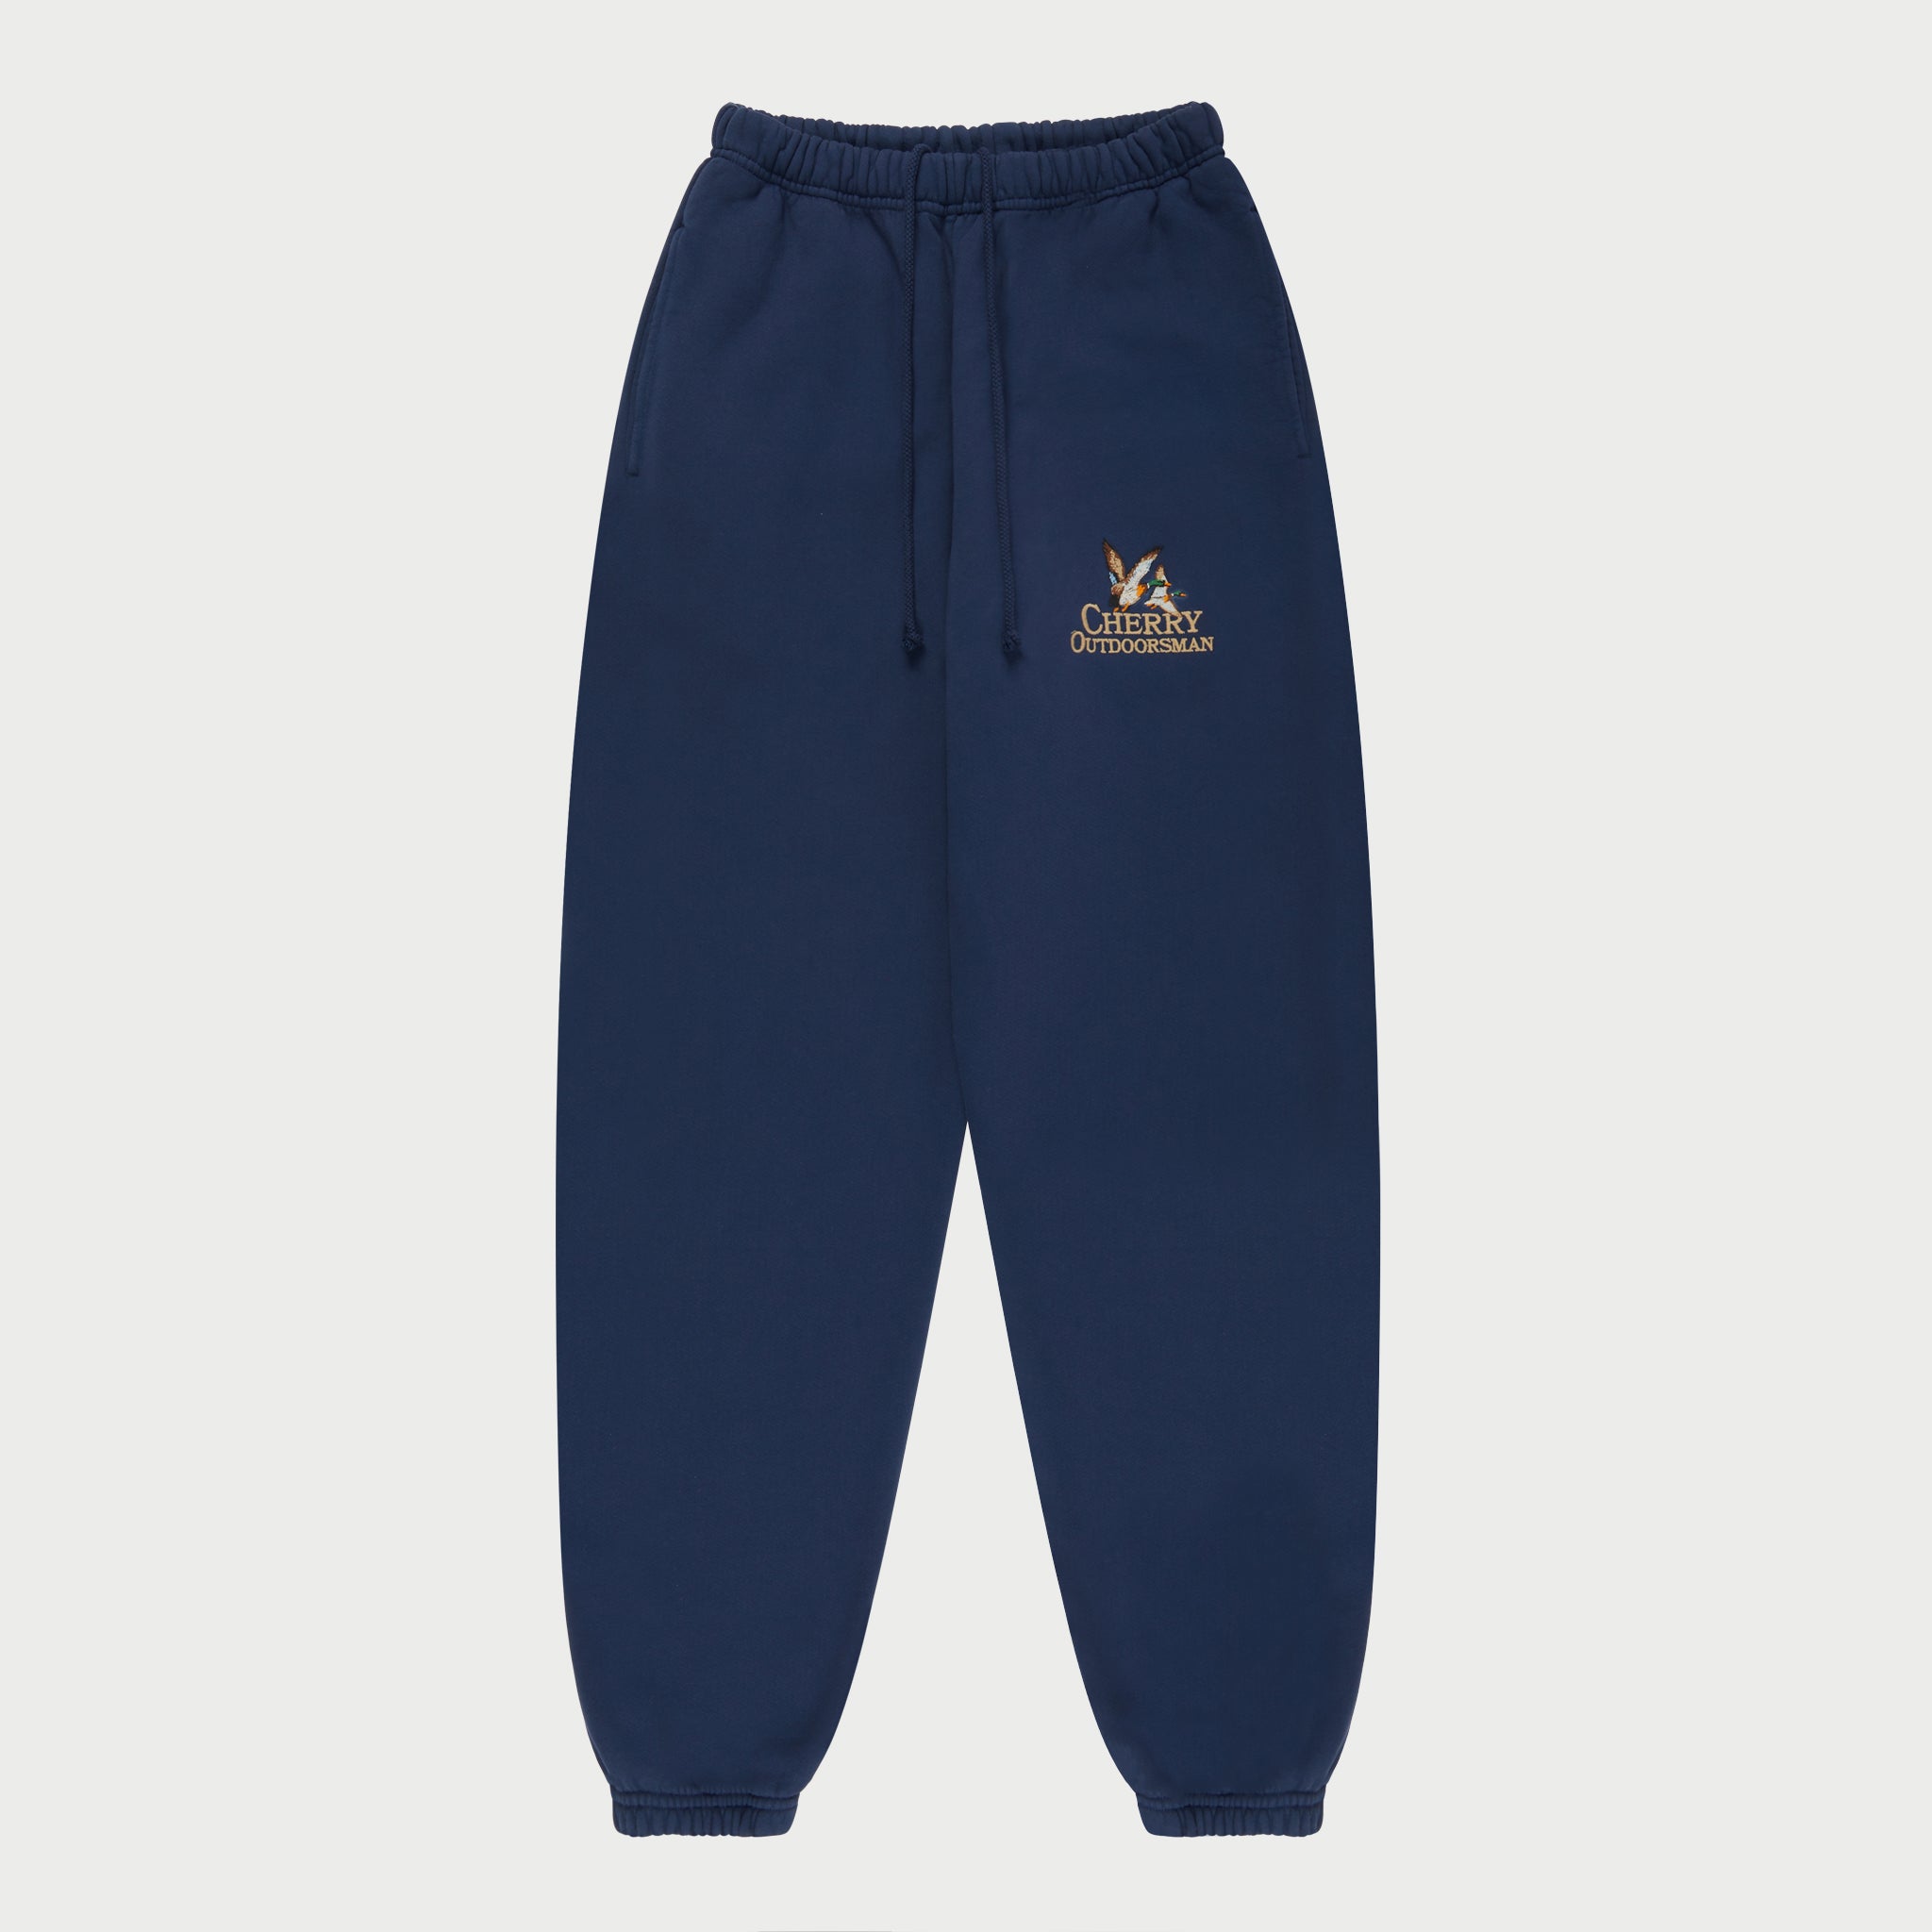 Outdoorsman Sweatpants (Navy)